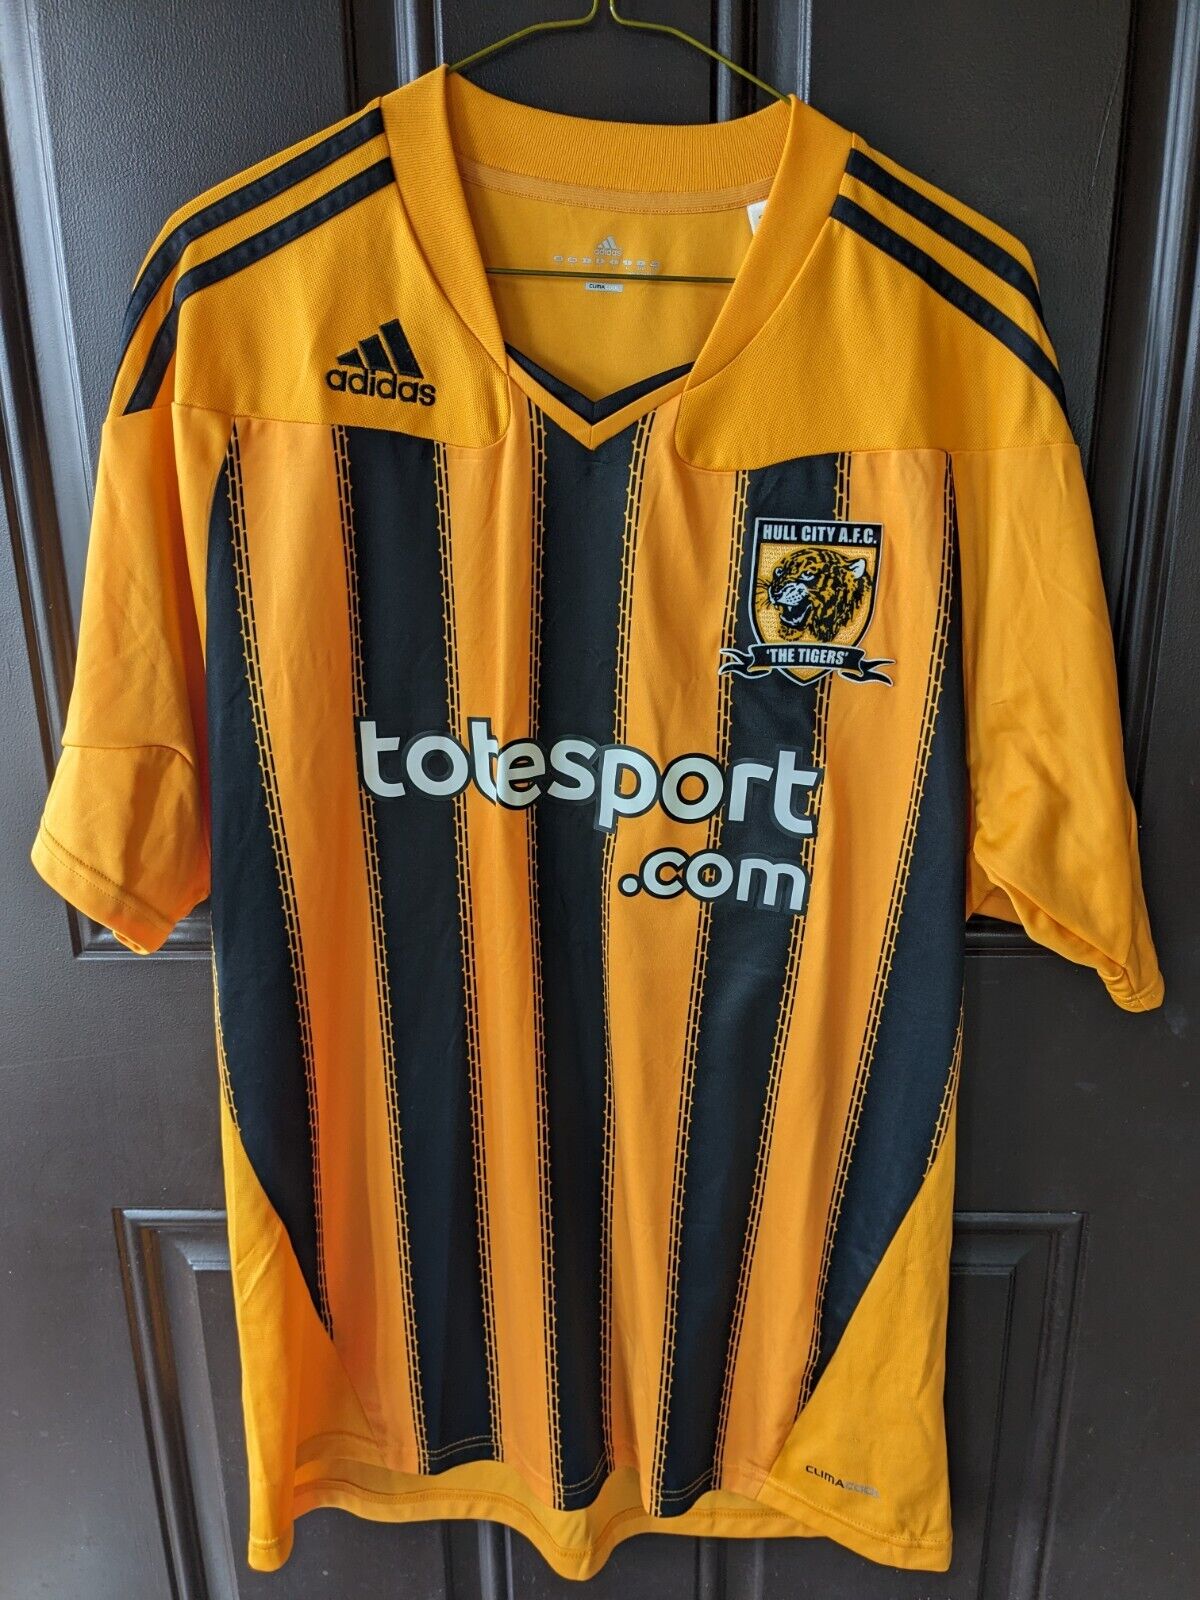 Hull City AFC - 2010/11 Home Jersey Shirt - Adidas - Men\'s LARGE